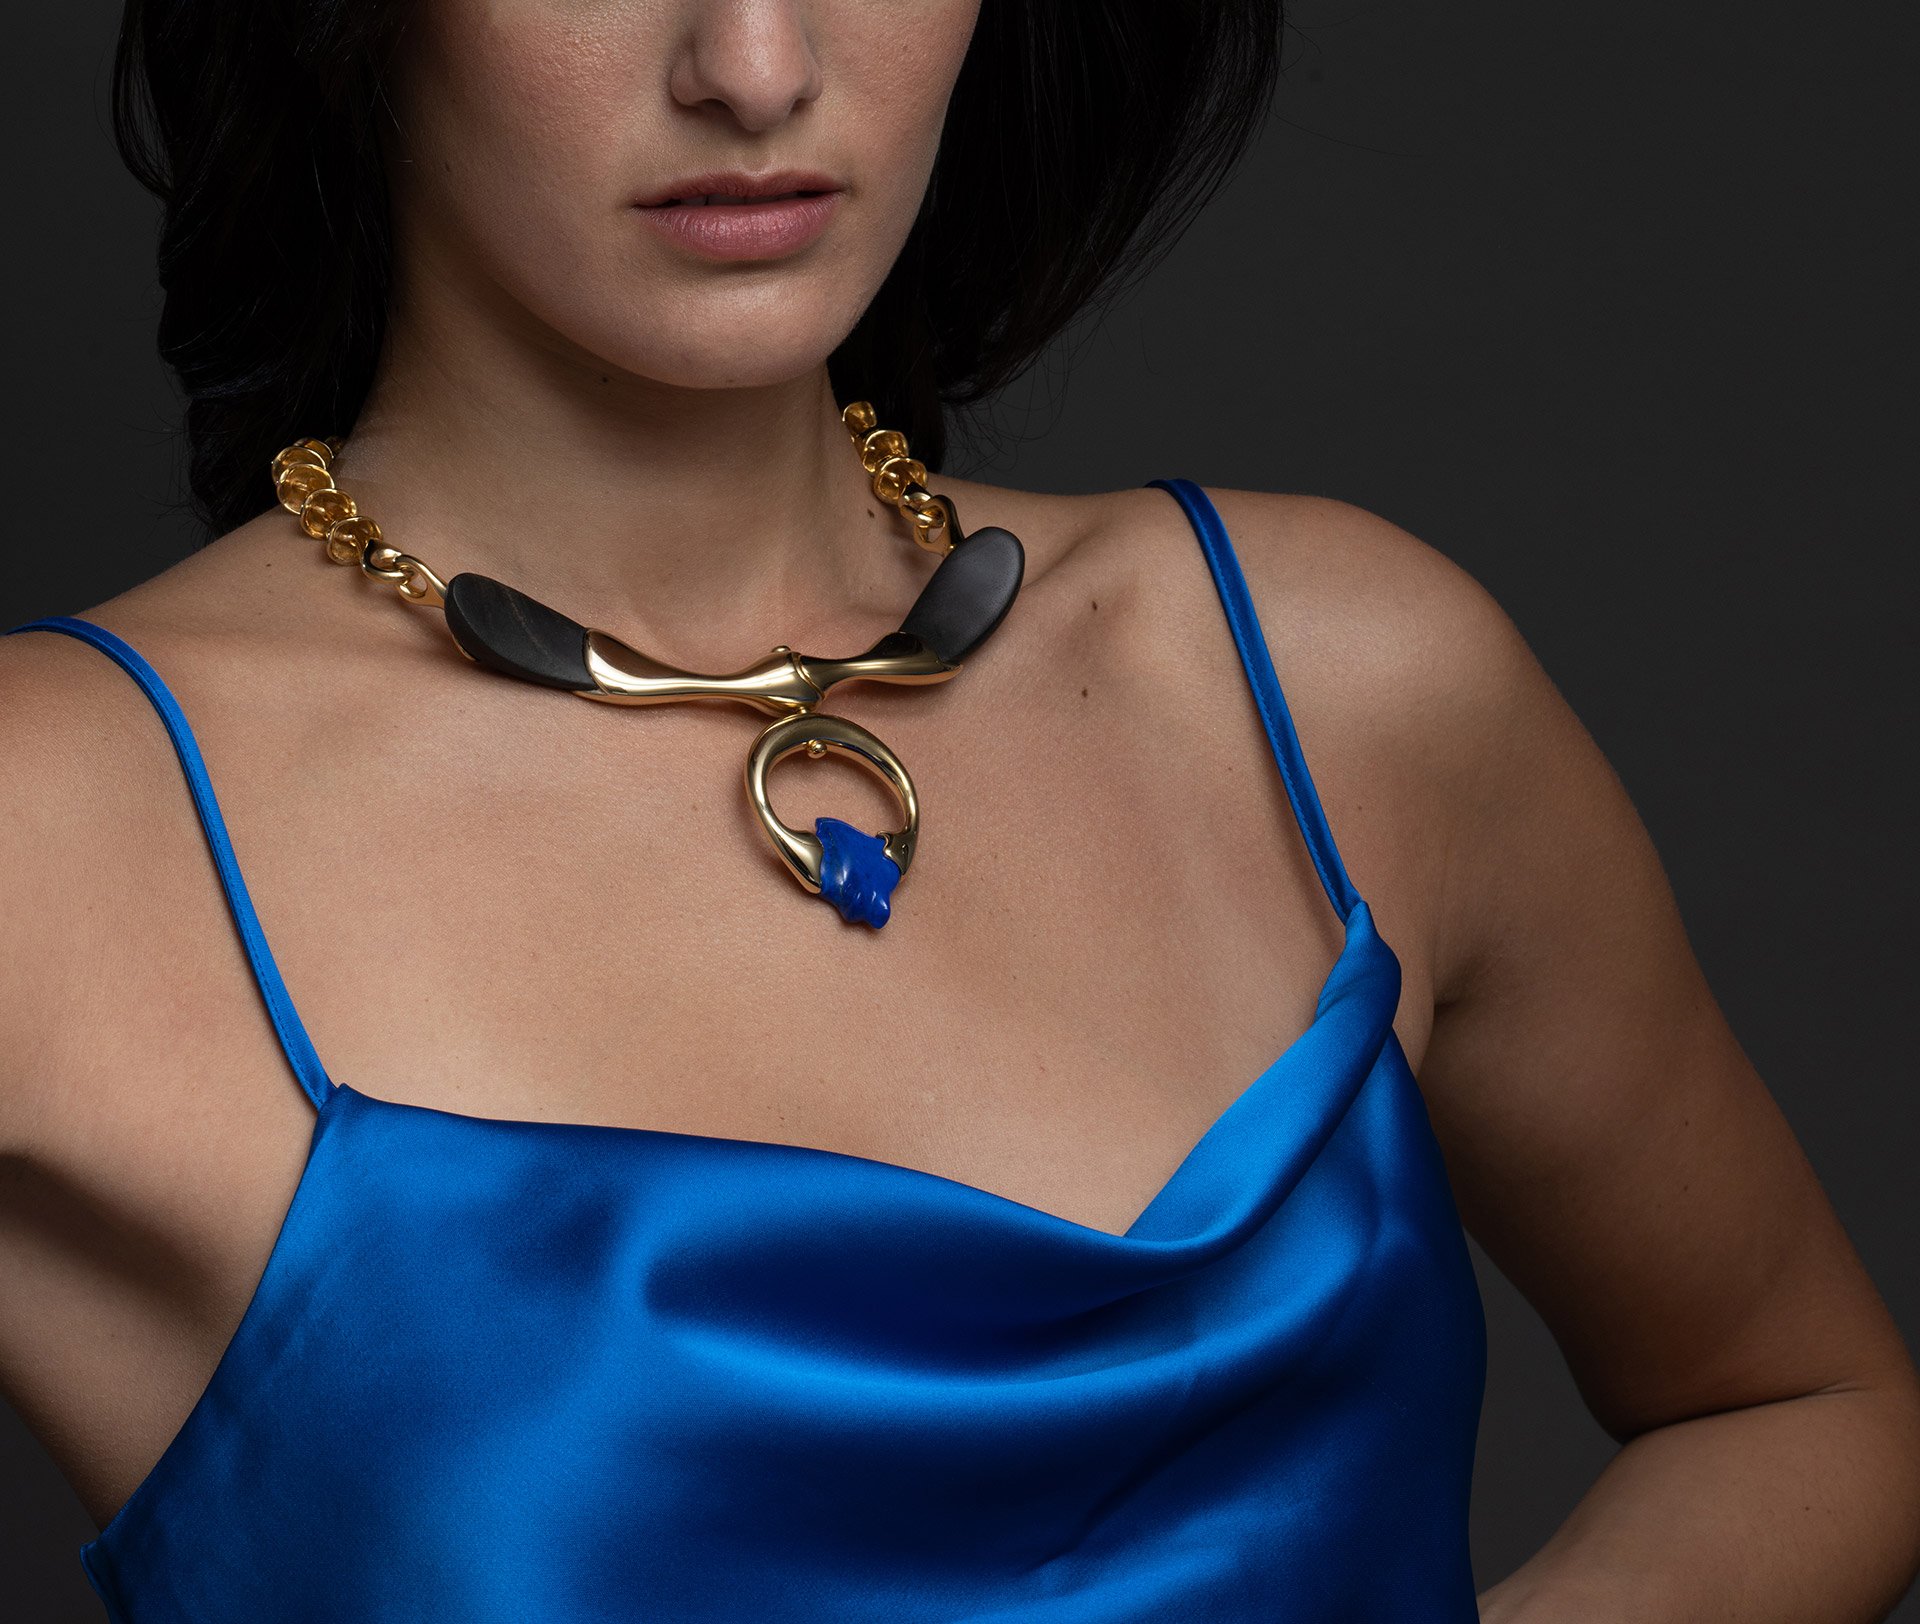 PLASTIC-egypt-necklaces-collection-julio-martinez-barnetche-marion-friedmann-gallery-LR-egypt131-lr.jpg